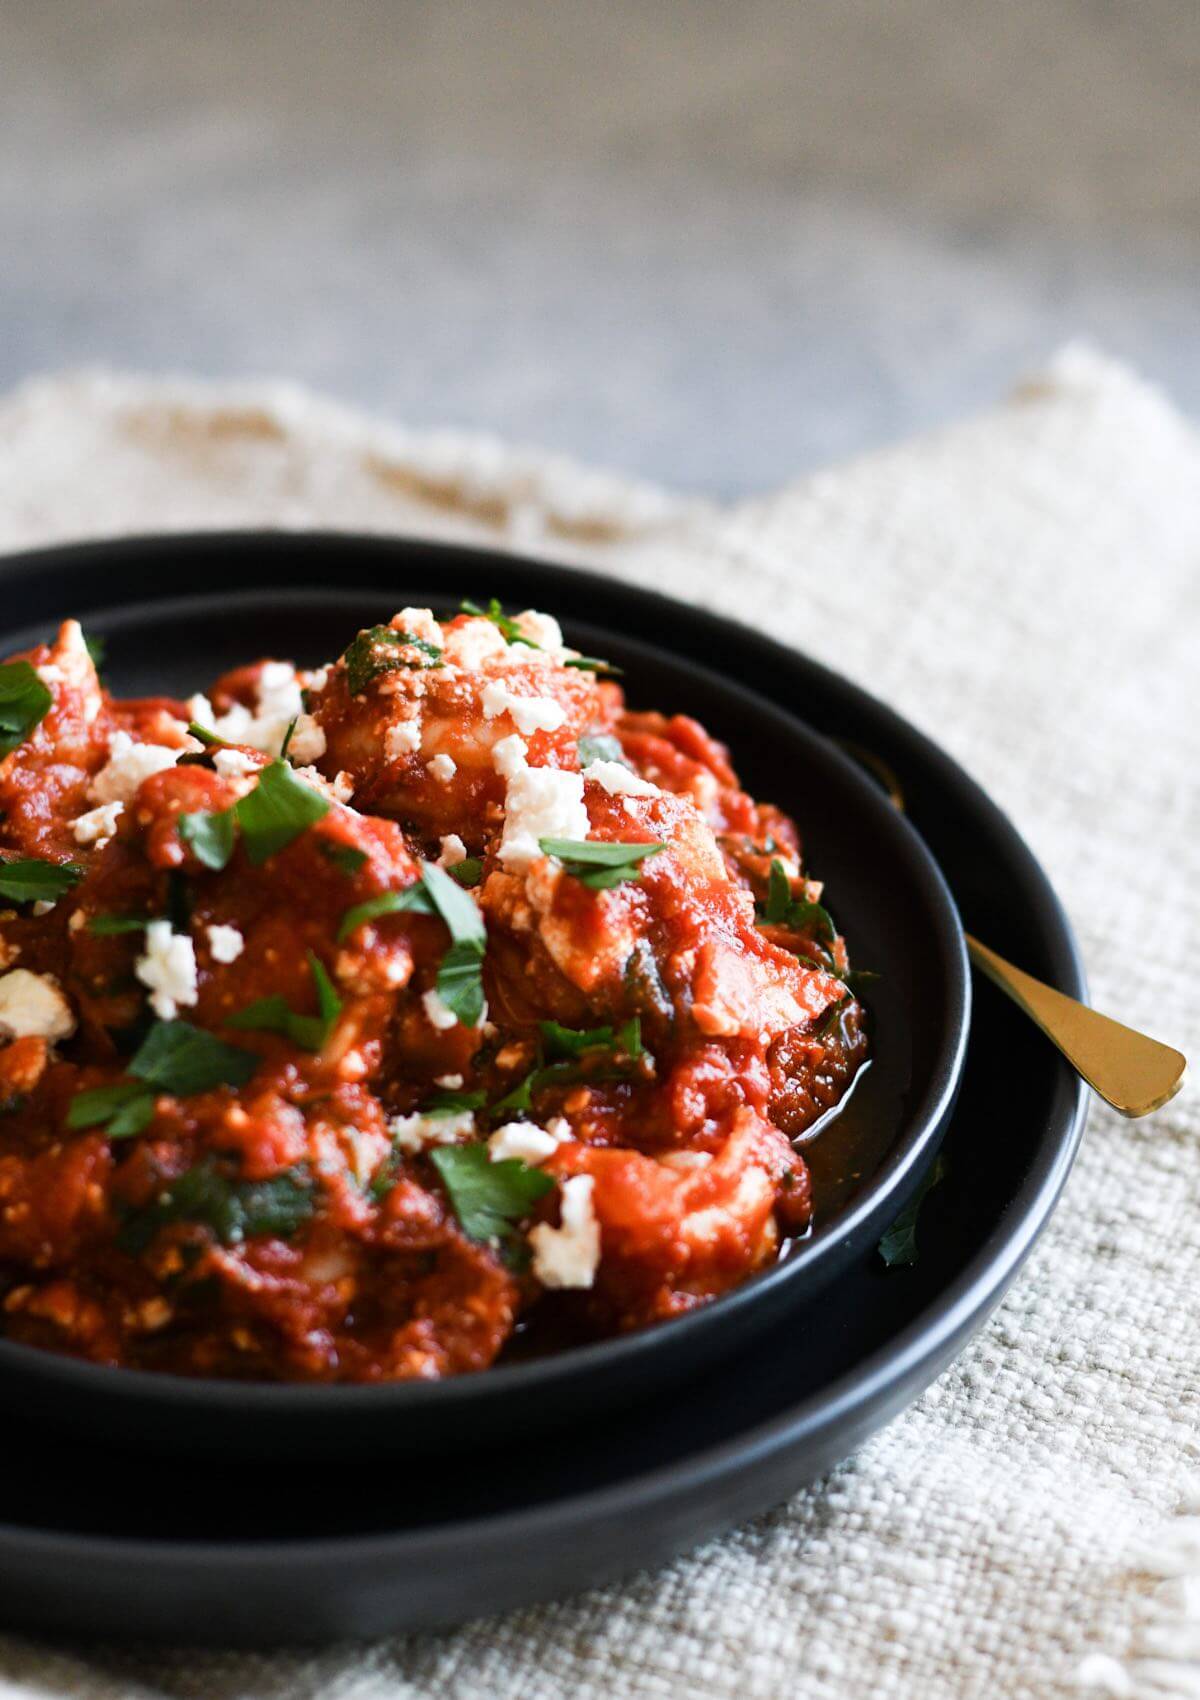 shrimp saganaki with tomato sauce, feta, and Italian parsley in a black bowl.